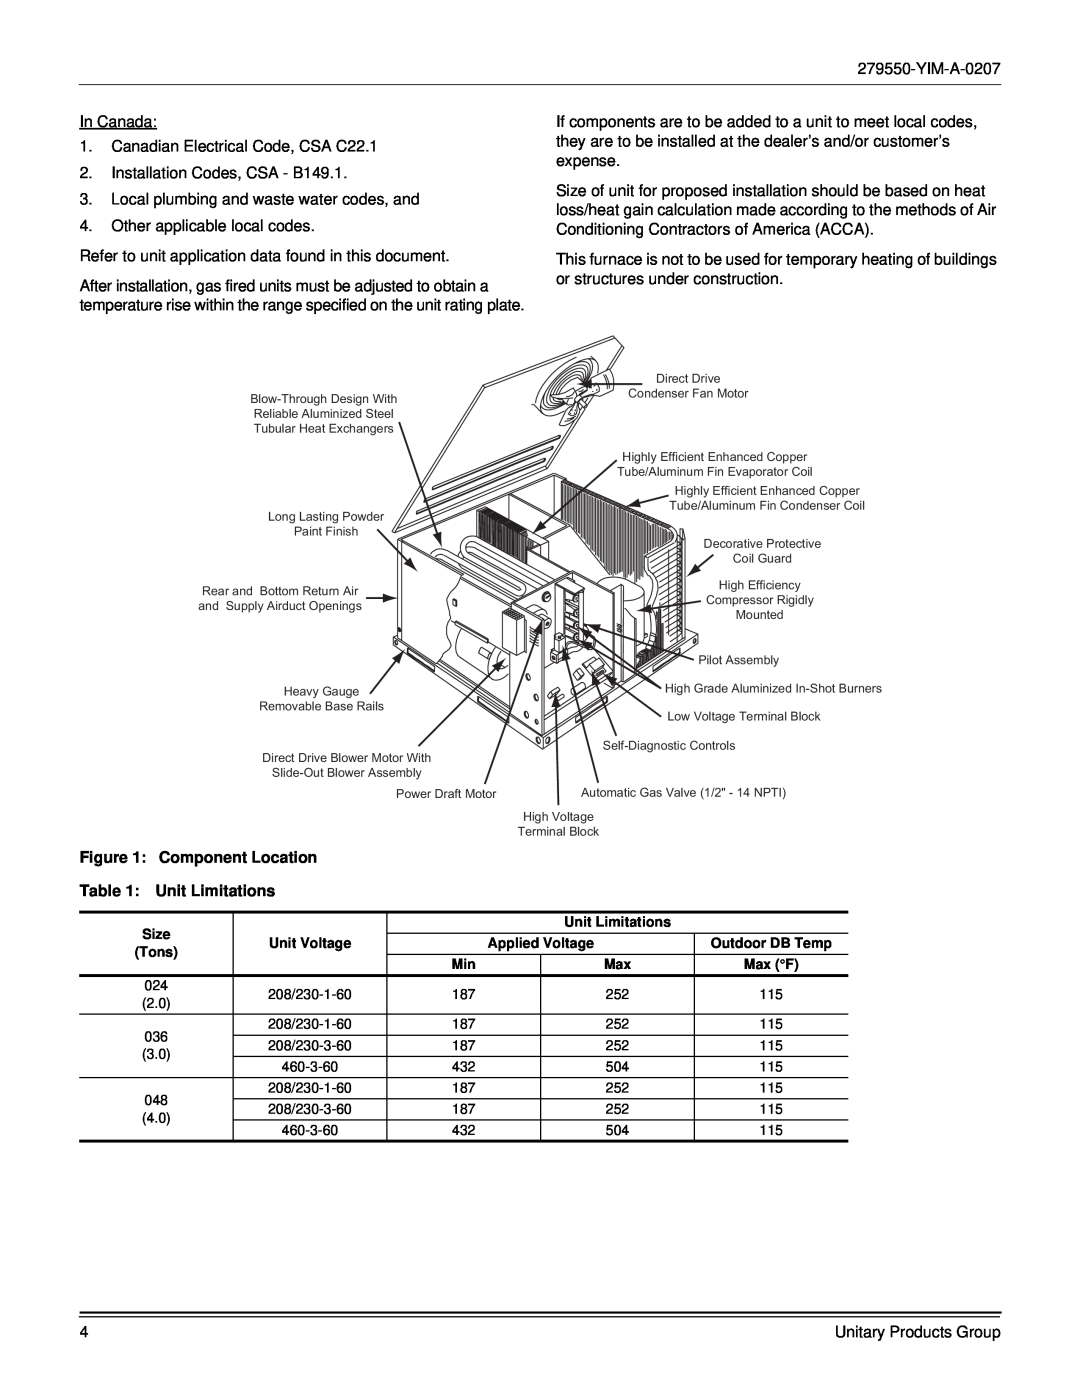 York R-410A dimensions Component Location, Unit Limitations 